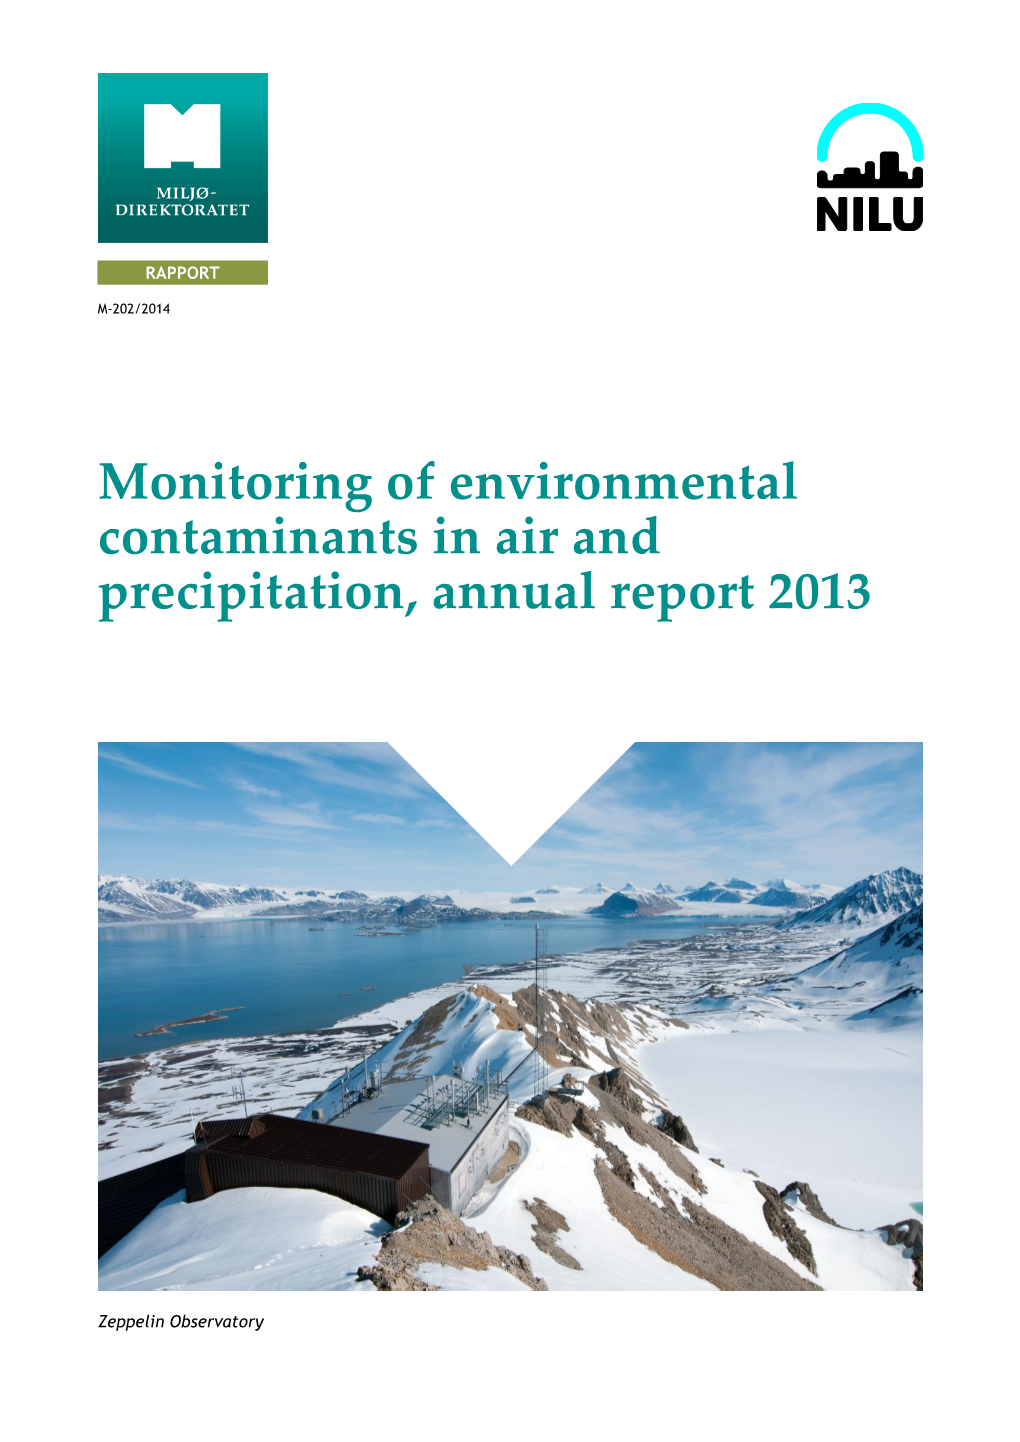 Monitoring of Environmental Contaminants in Air and Precipitation, Annual Report 2013